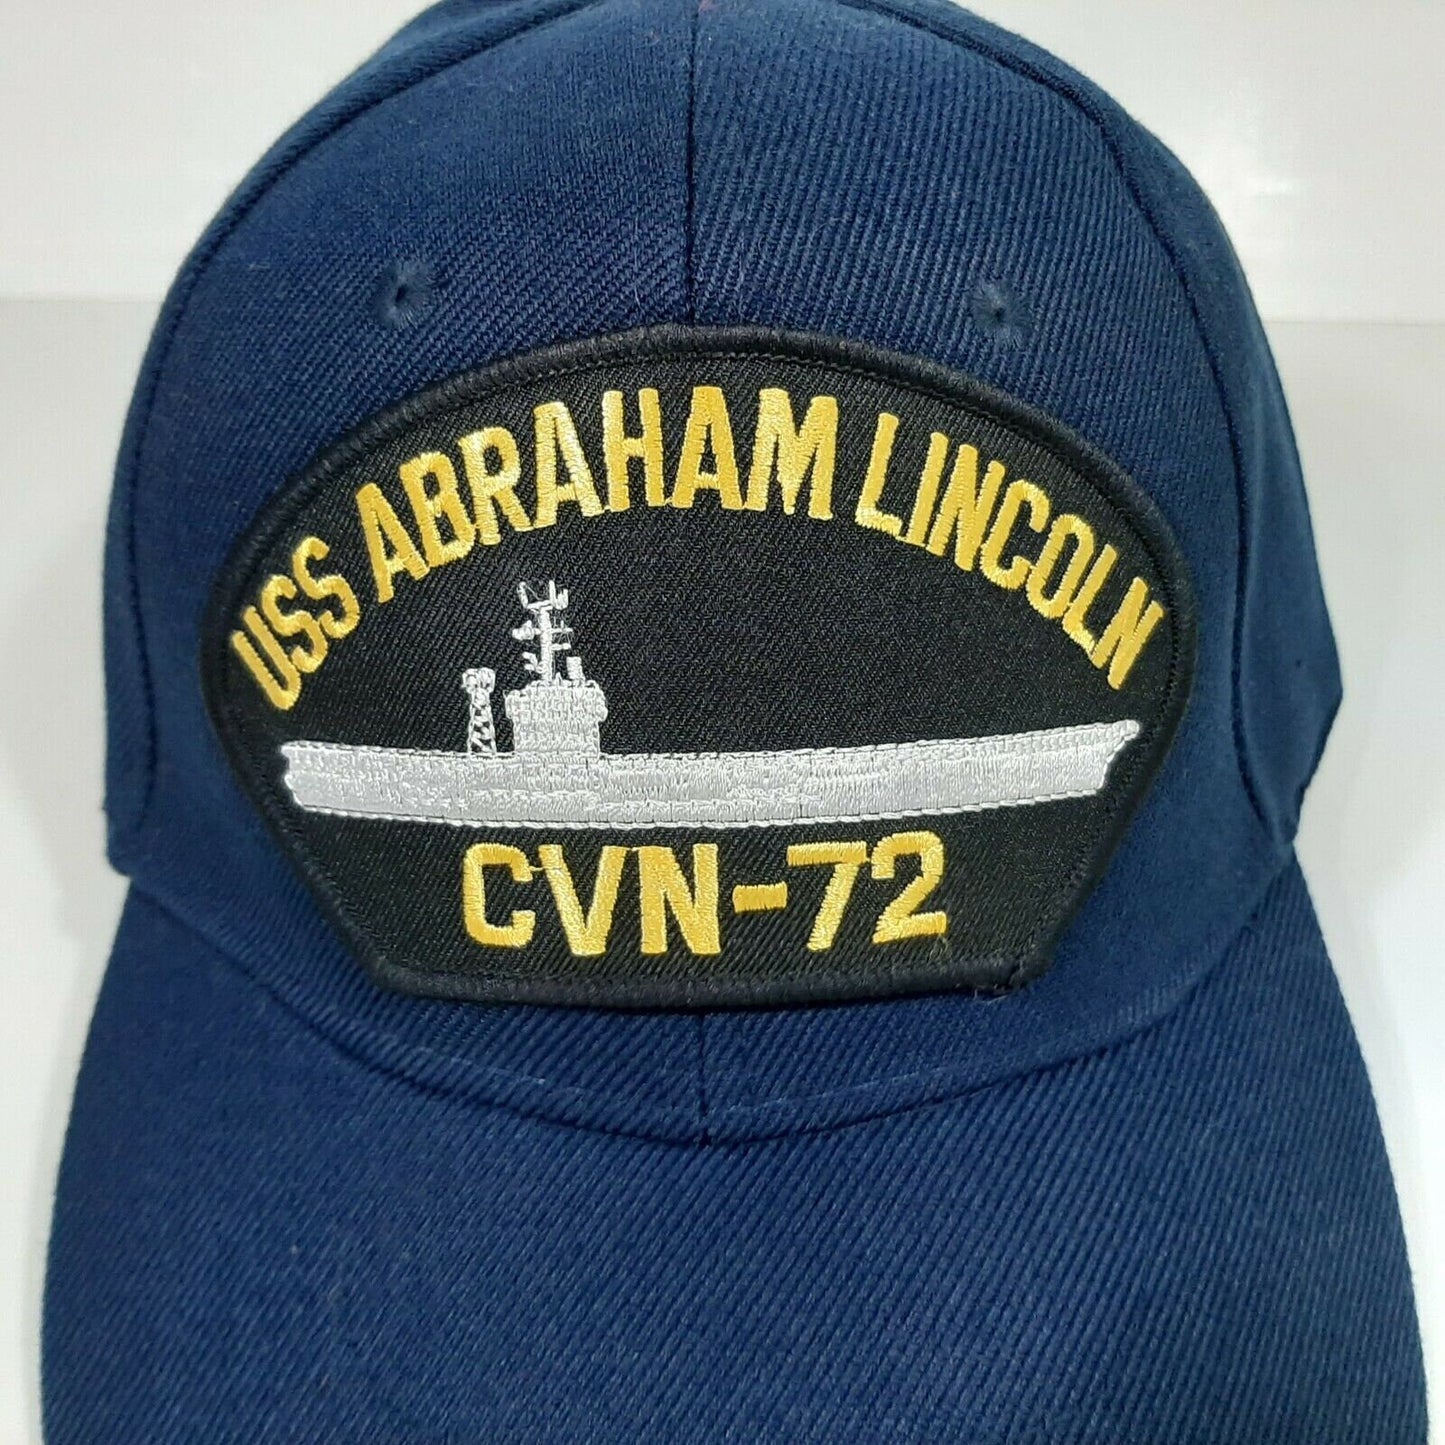 U.S. Navy USS Abraham Lincoln CVN-72 Men's Patch Cap Hat Navy Blue Acrylic